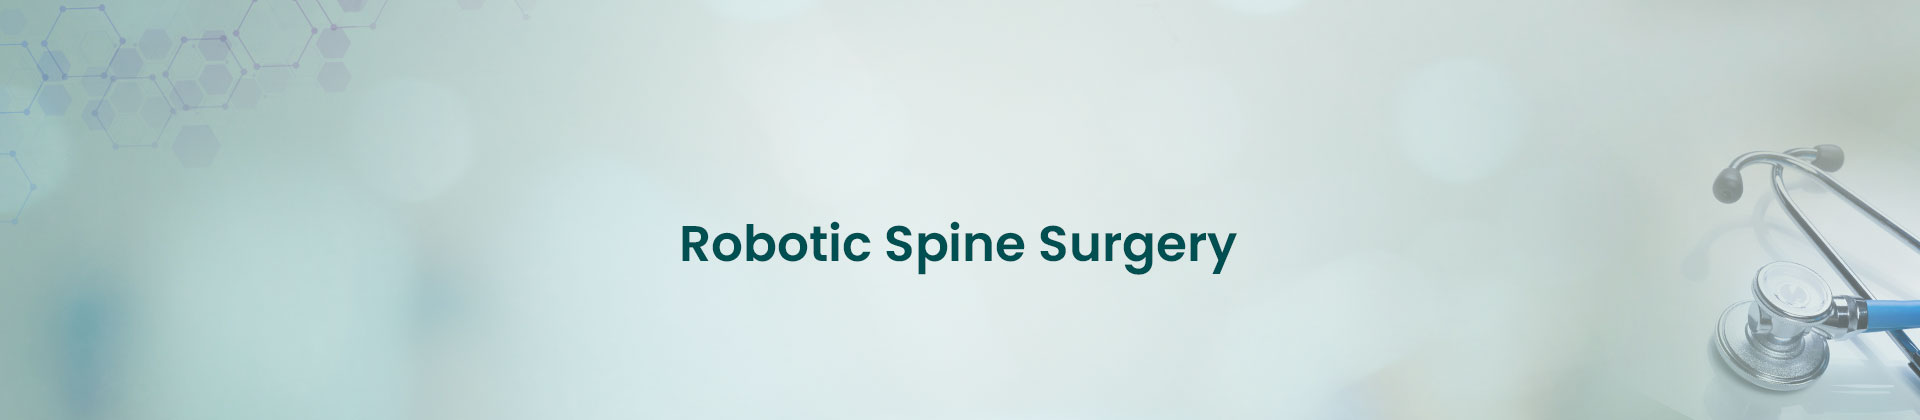 Robotic Spine Surgery